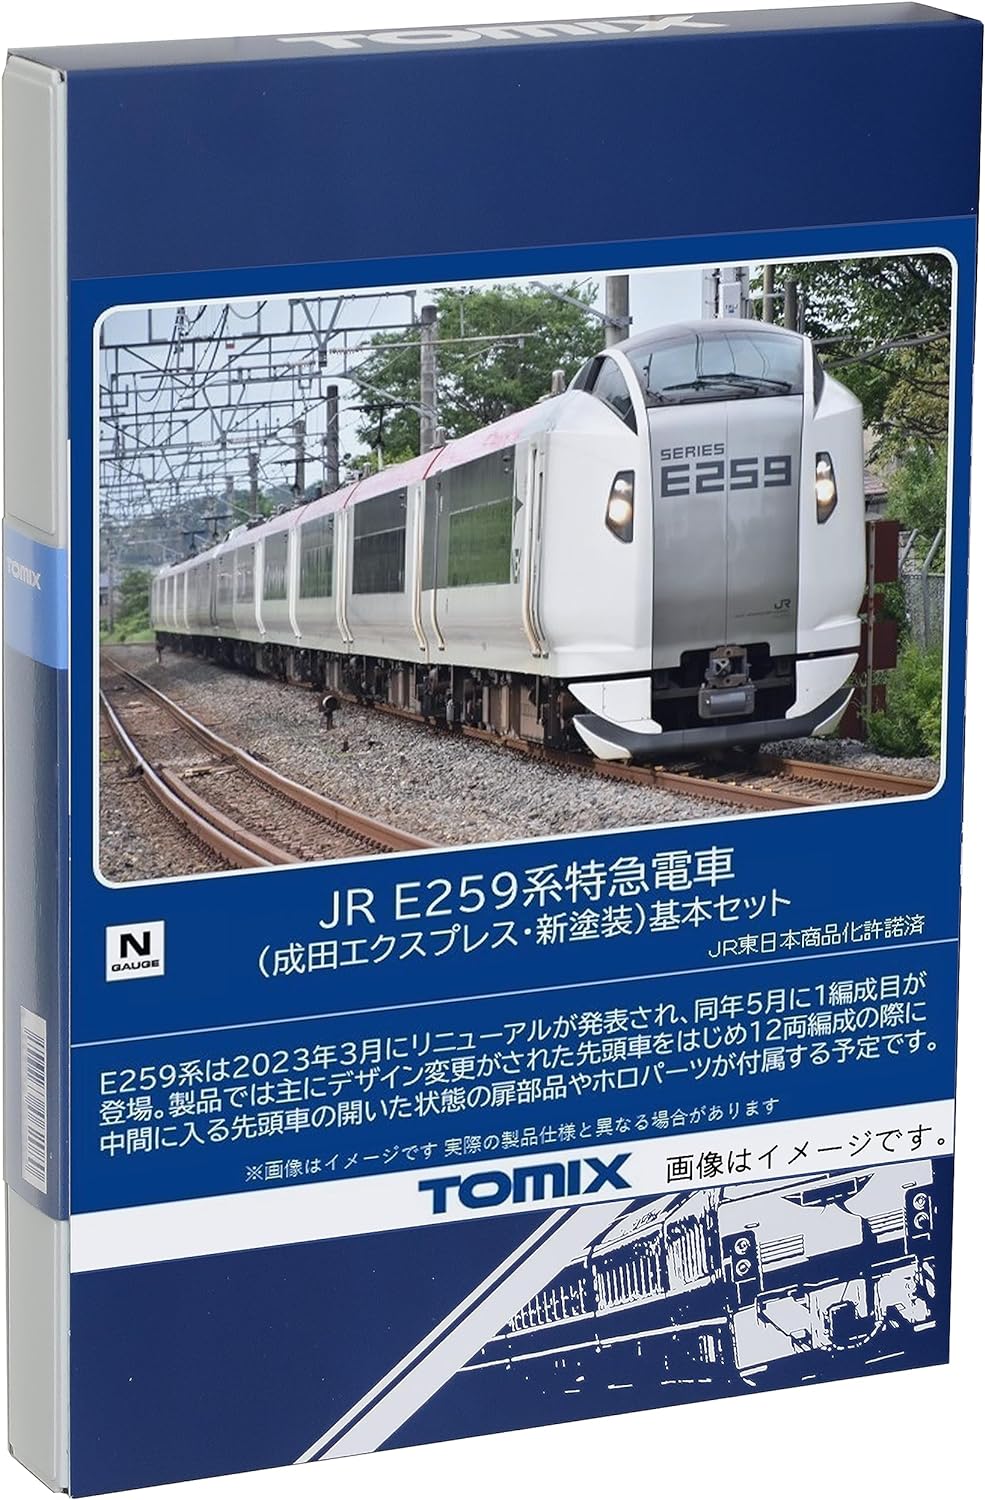 TOMIX 98551 N Gauge JR E259 Series Narita Express New Paint Basic Set Railway Model Train - BanzaiHobby